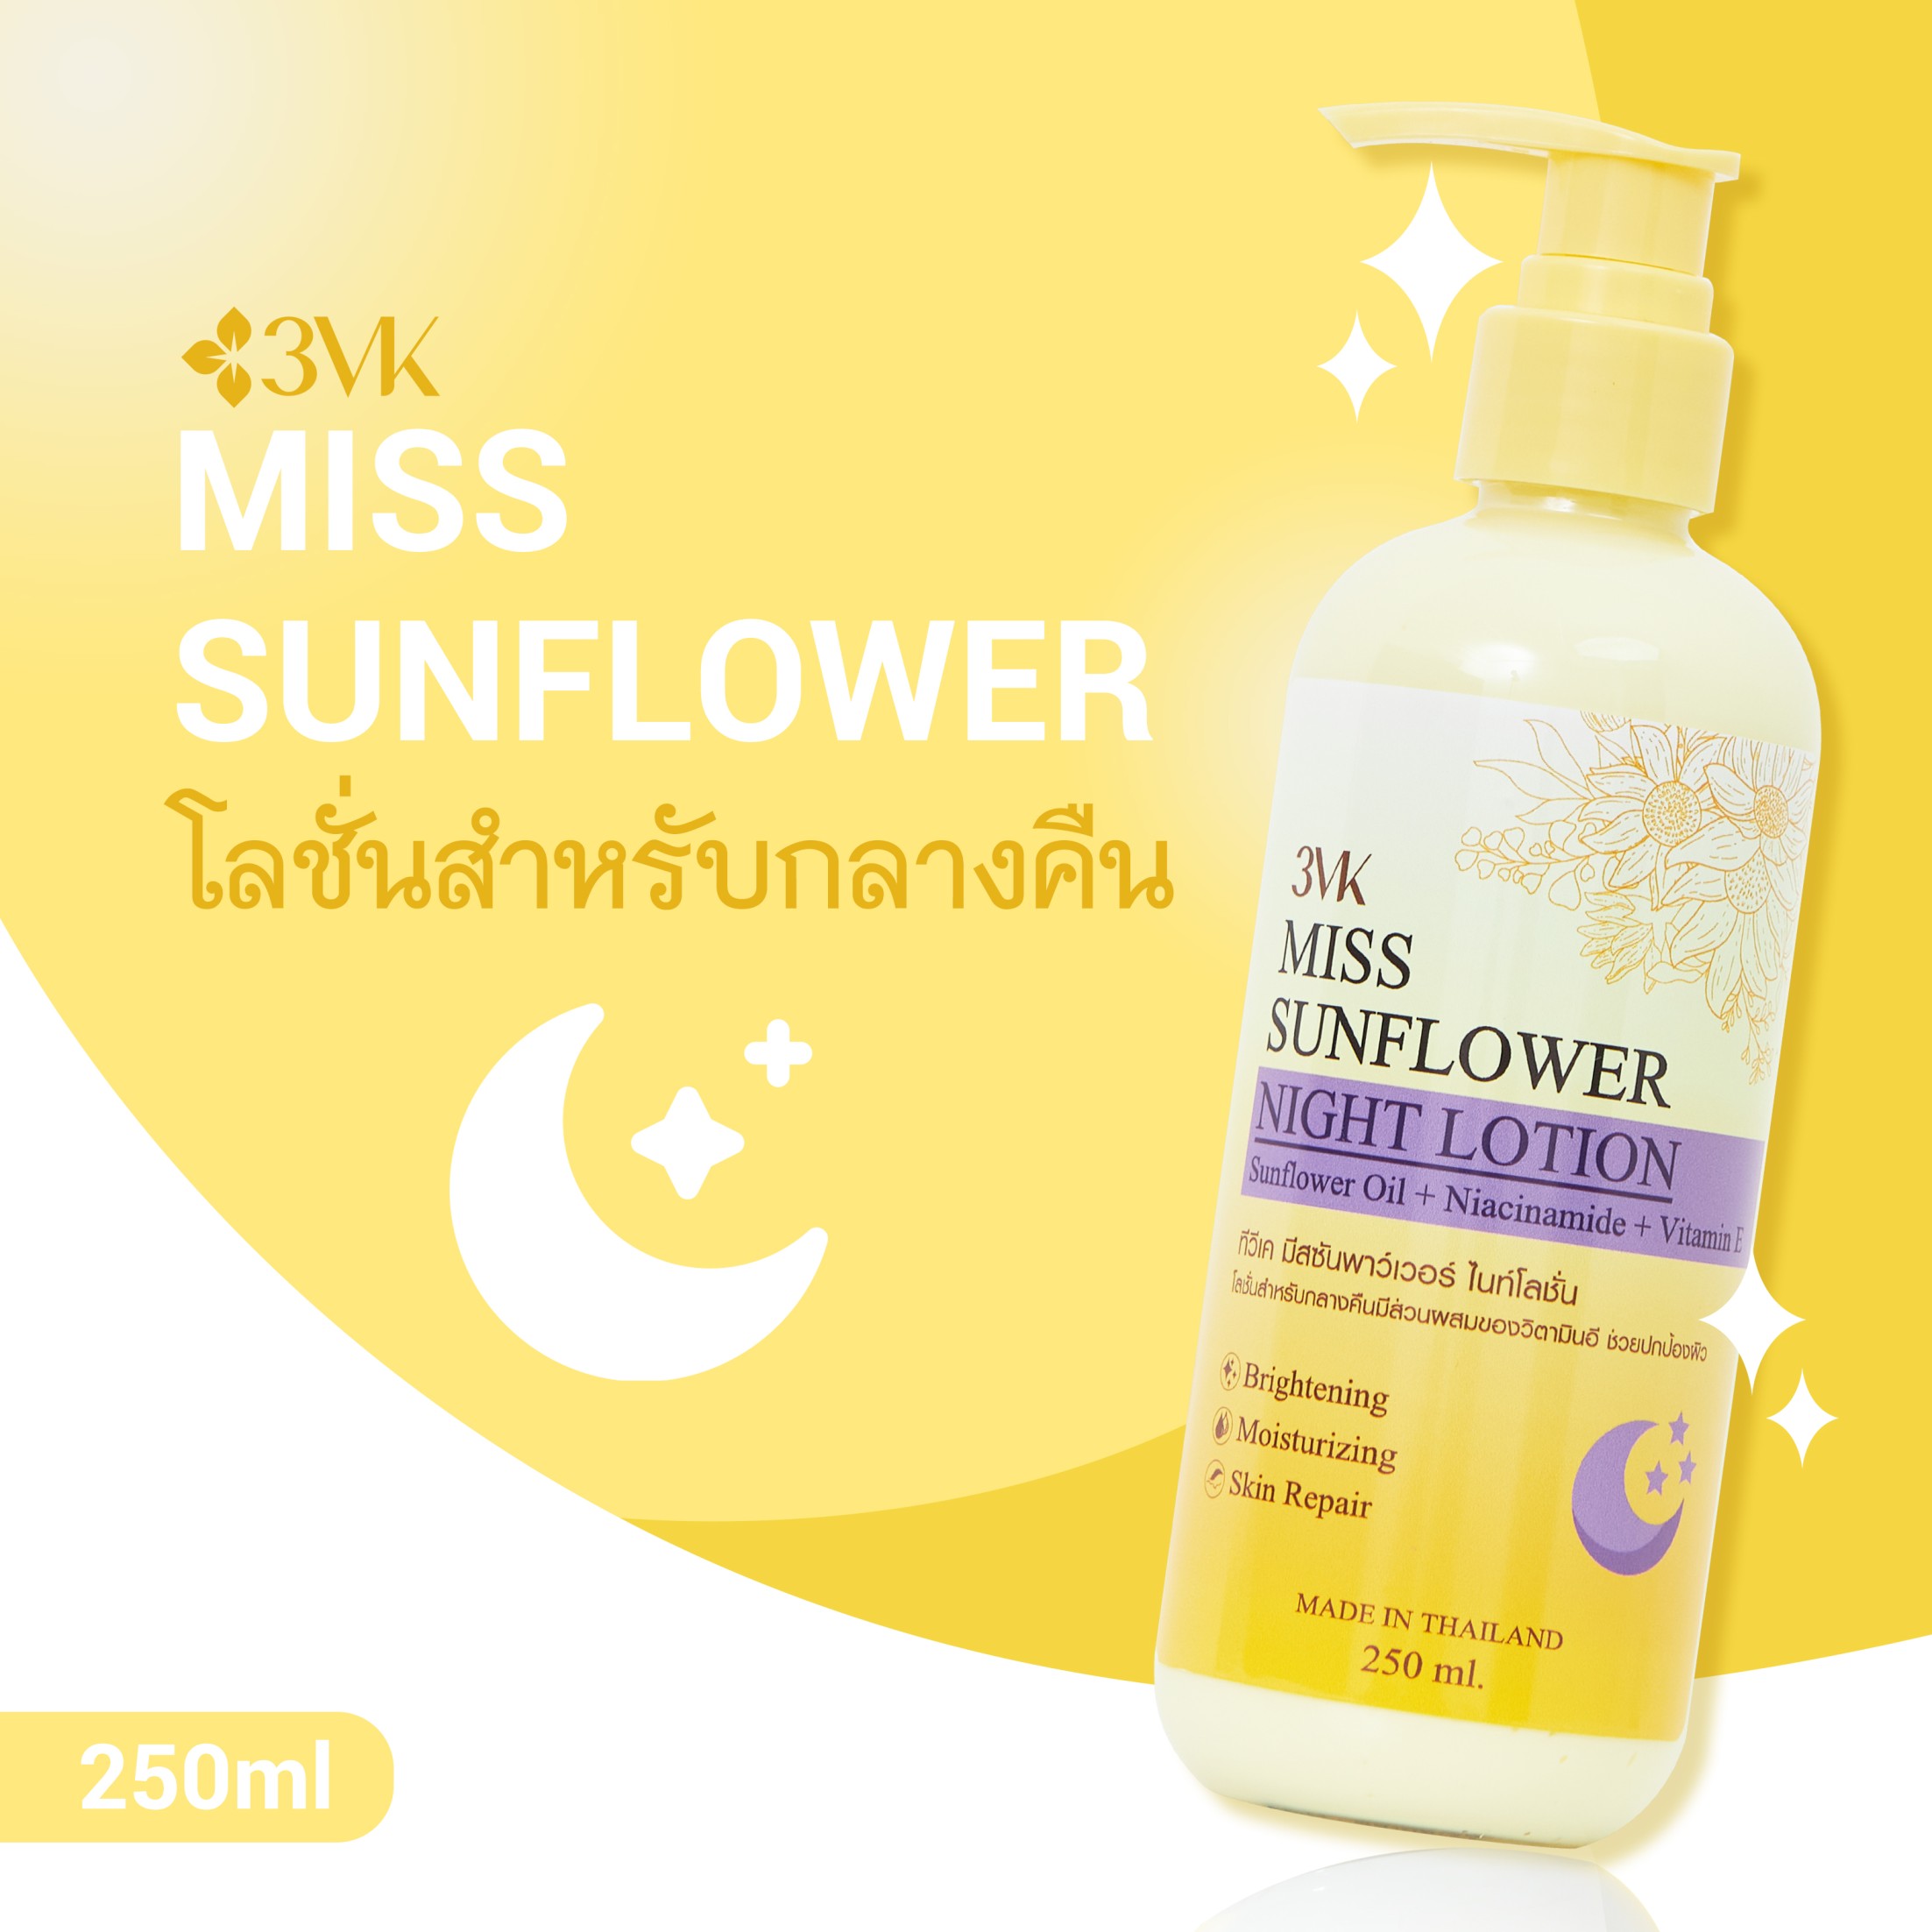 3VK Miss Sunflower Night Lotion 250ml